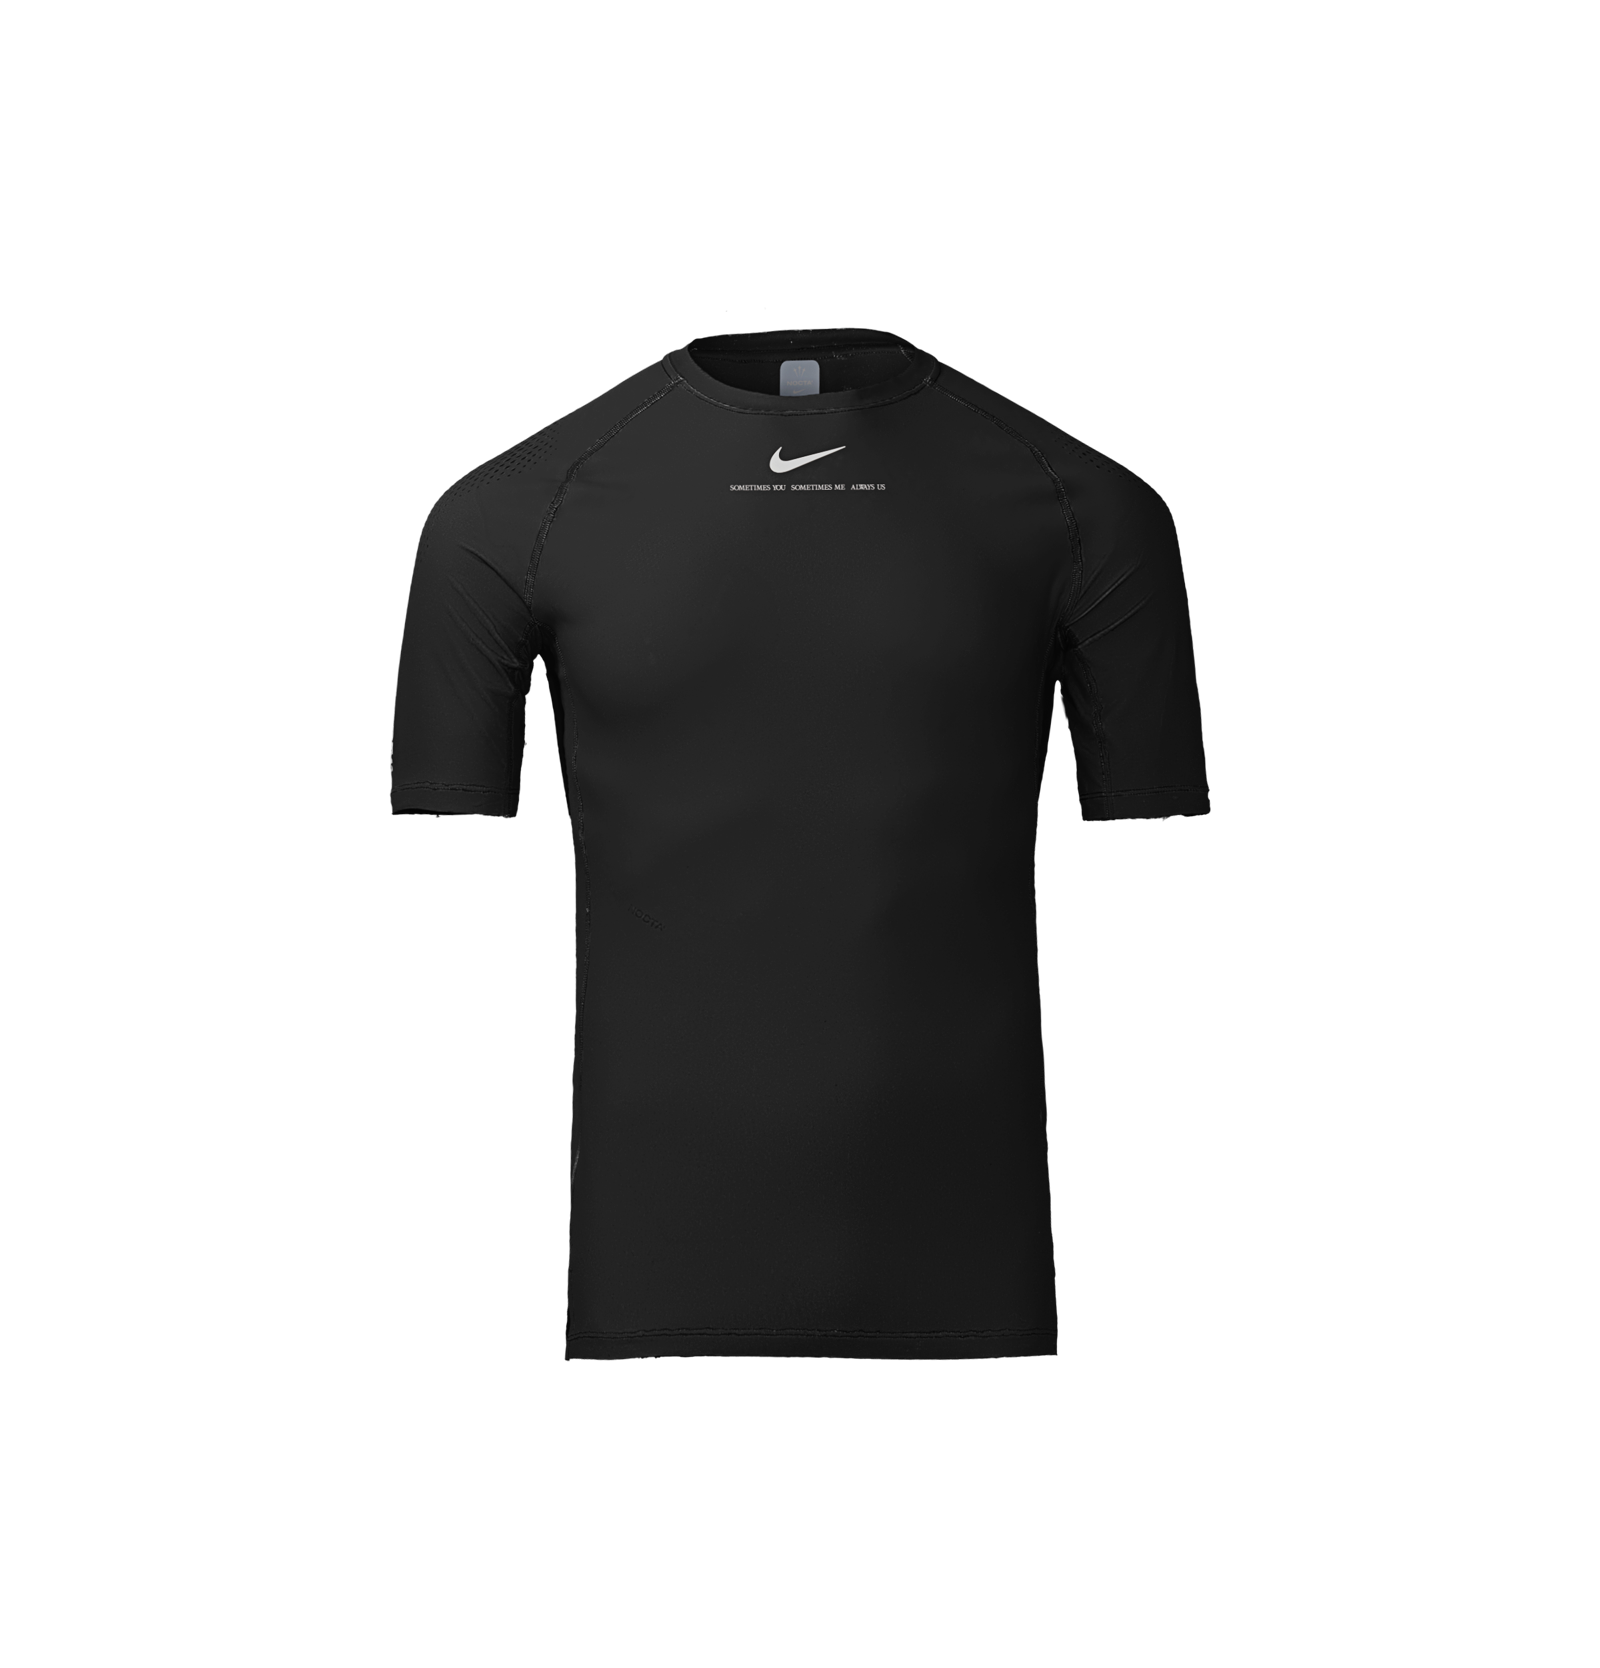 Nocta T-shirt In Black